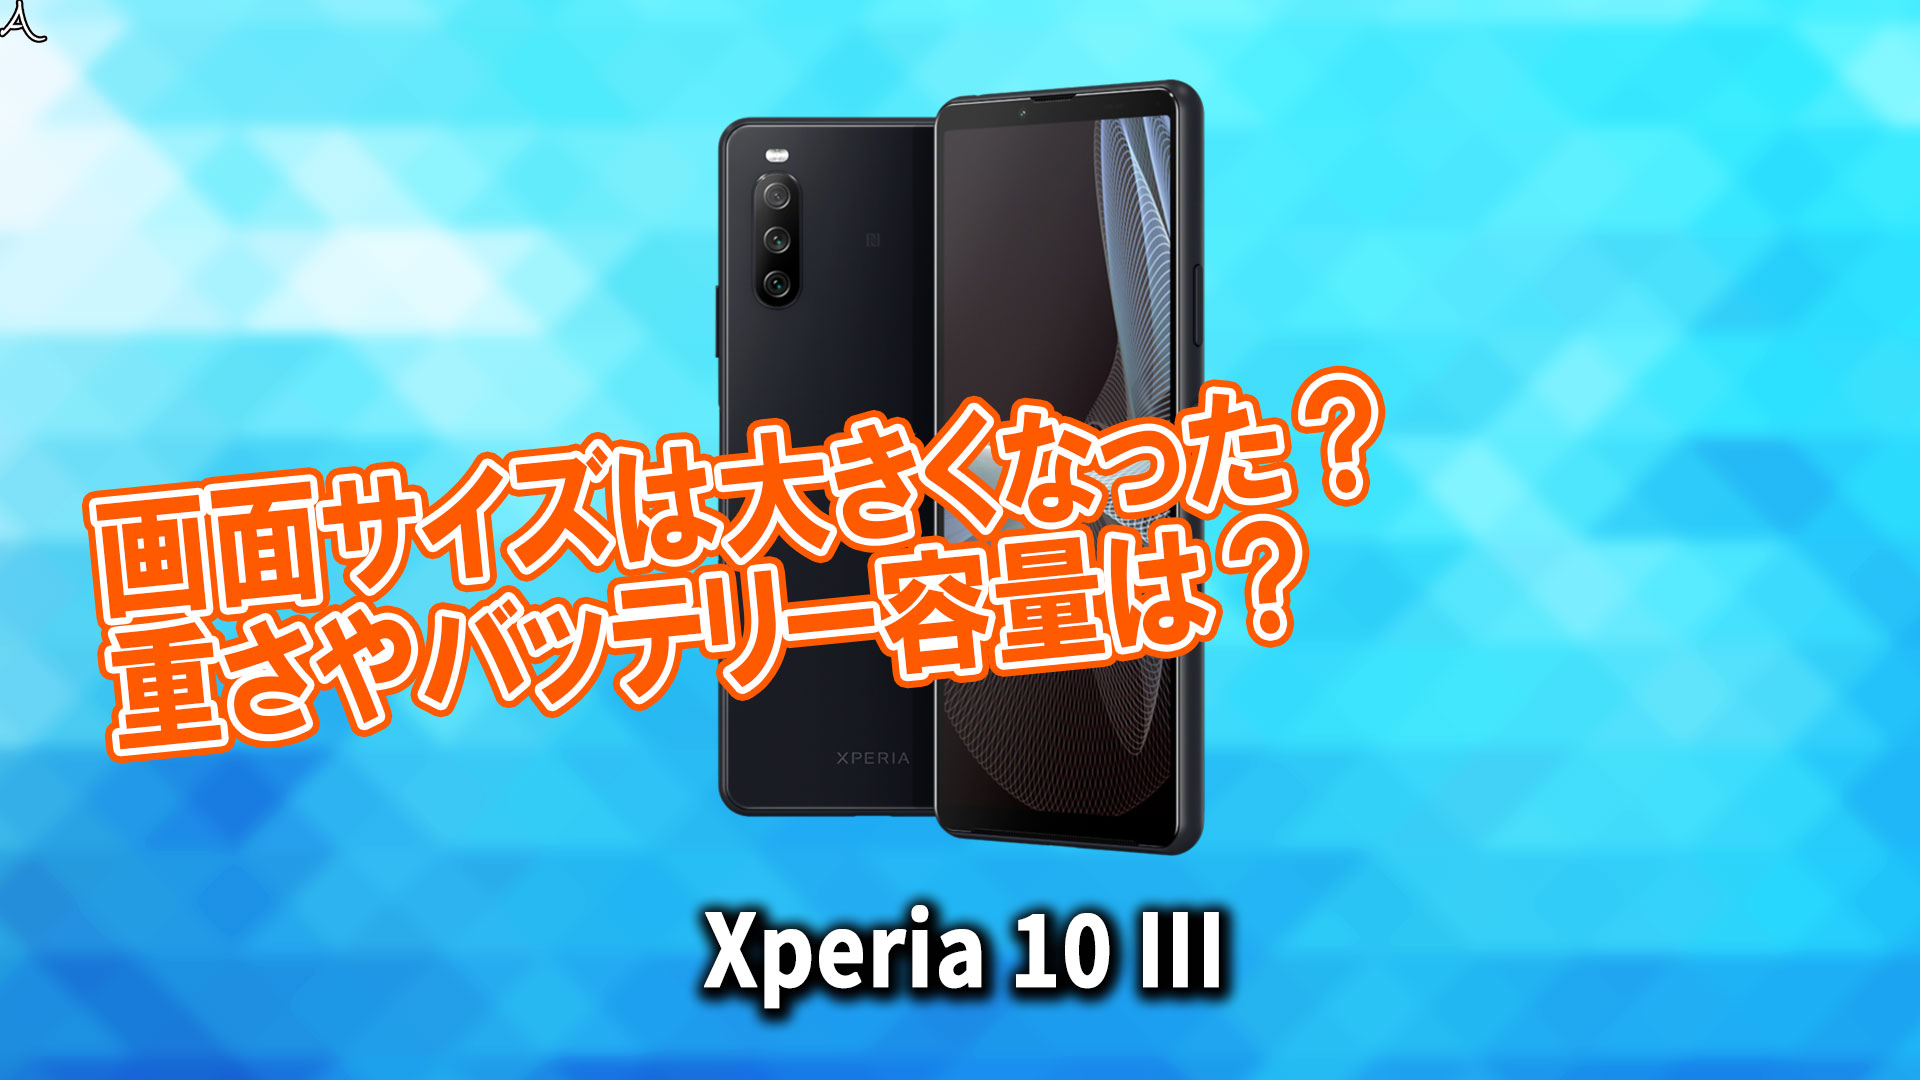 「Xperia 10 III」のサイズや重さを他のスマホと細かく比較